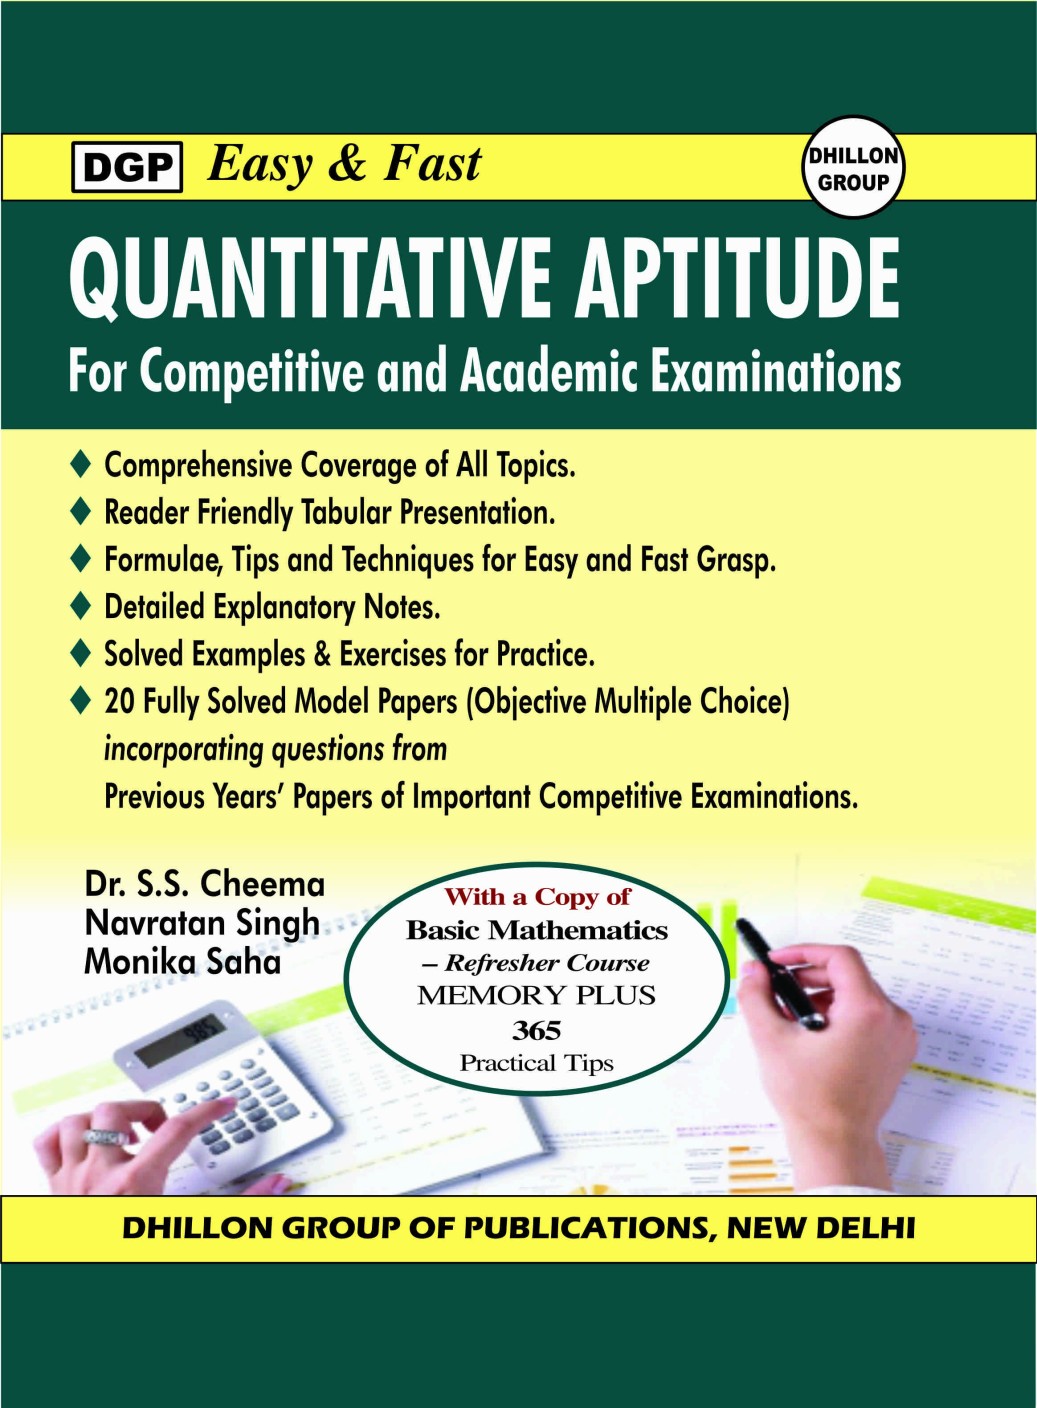 dgp-easy-fast-quantitative-aptitude-tests-with-a-free-copy-of-a-handbook-of-mathematics